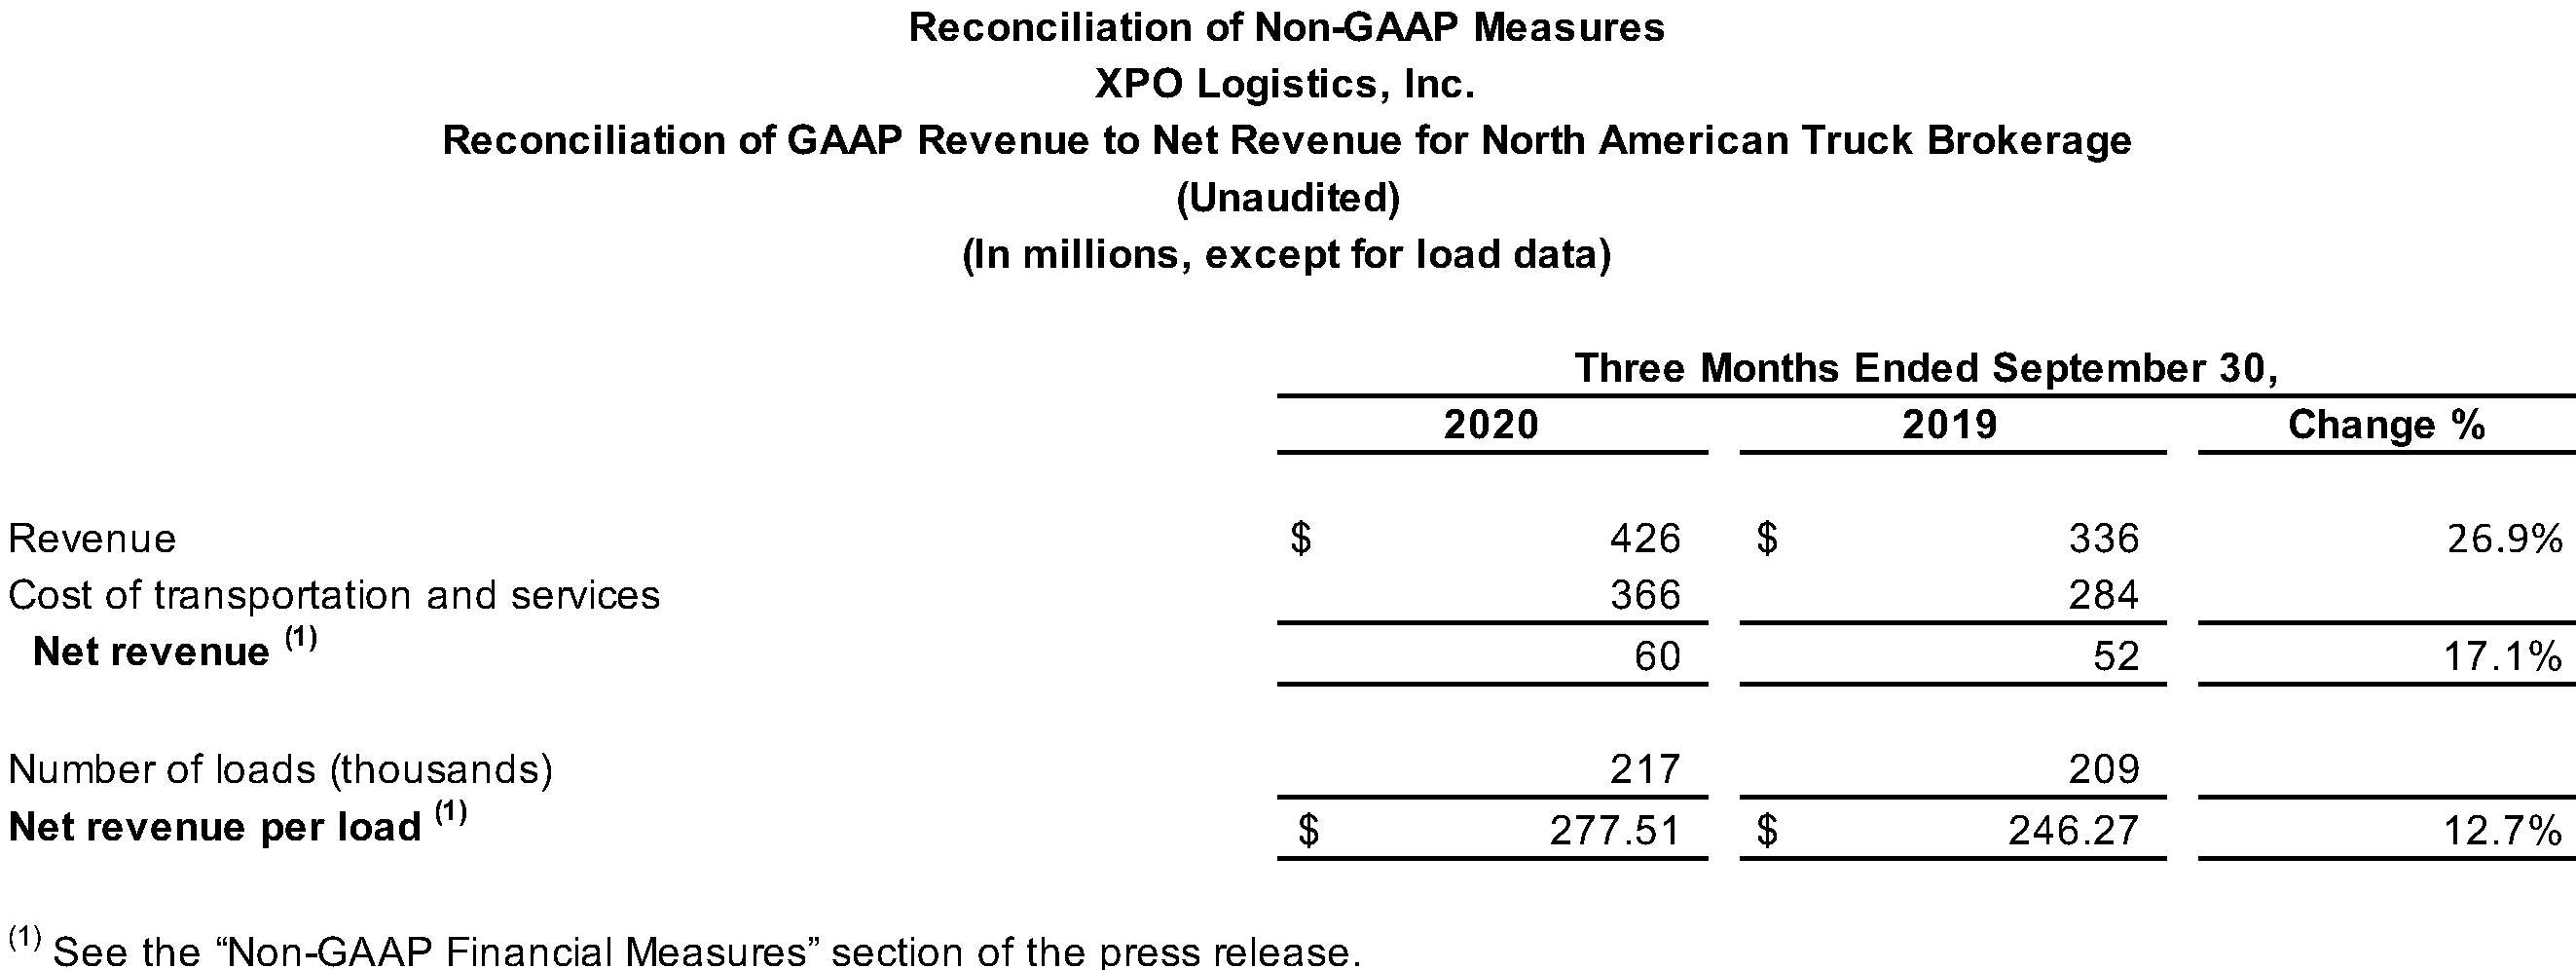 Reconciliation of GAAP Revenue to Net Revenue for North American Truck Brokerage